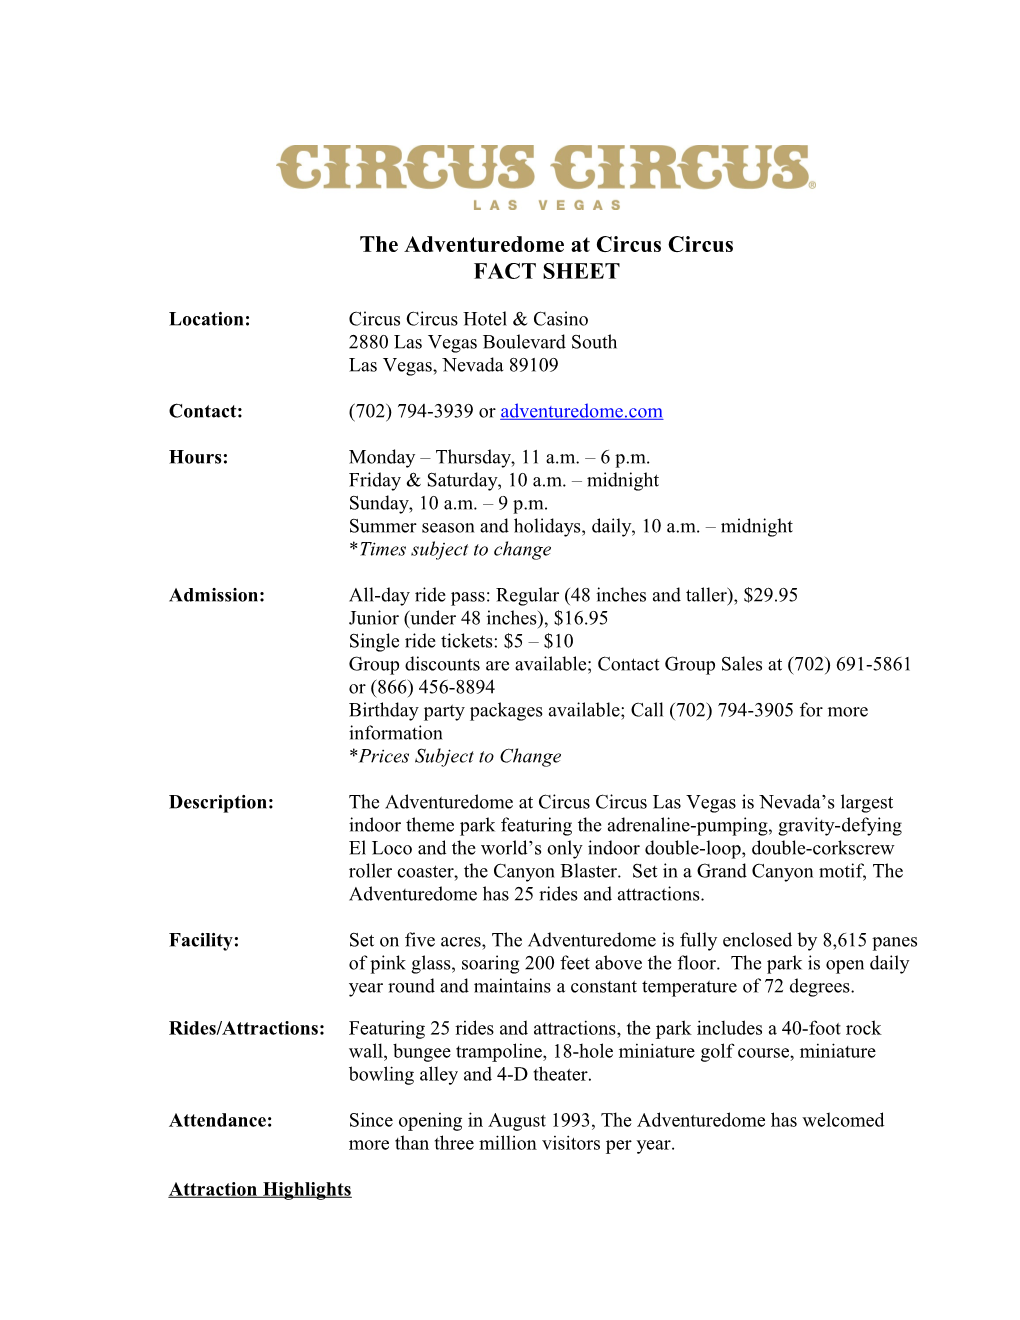 The Adventuredome at Circus Circus